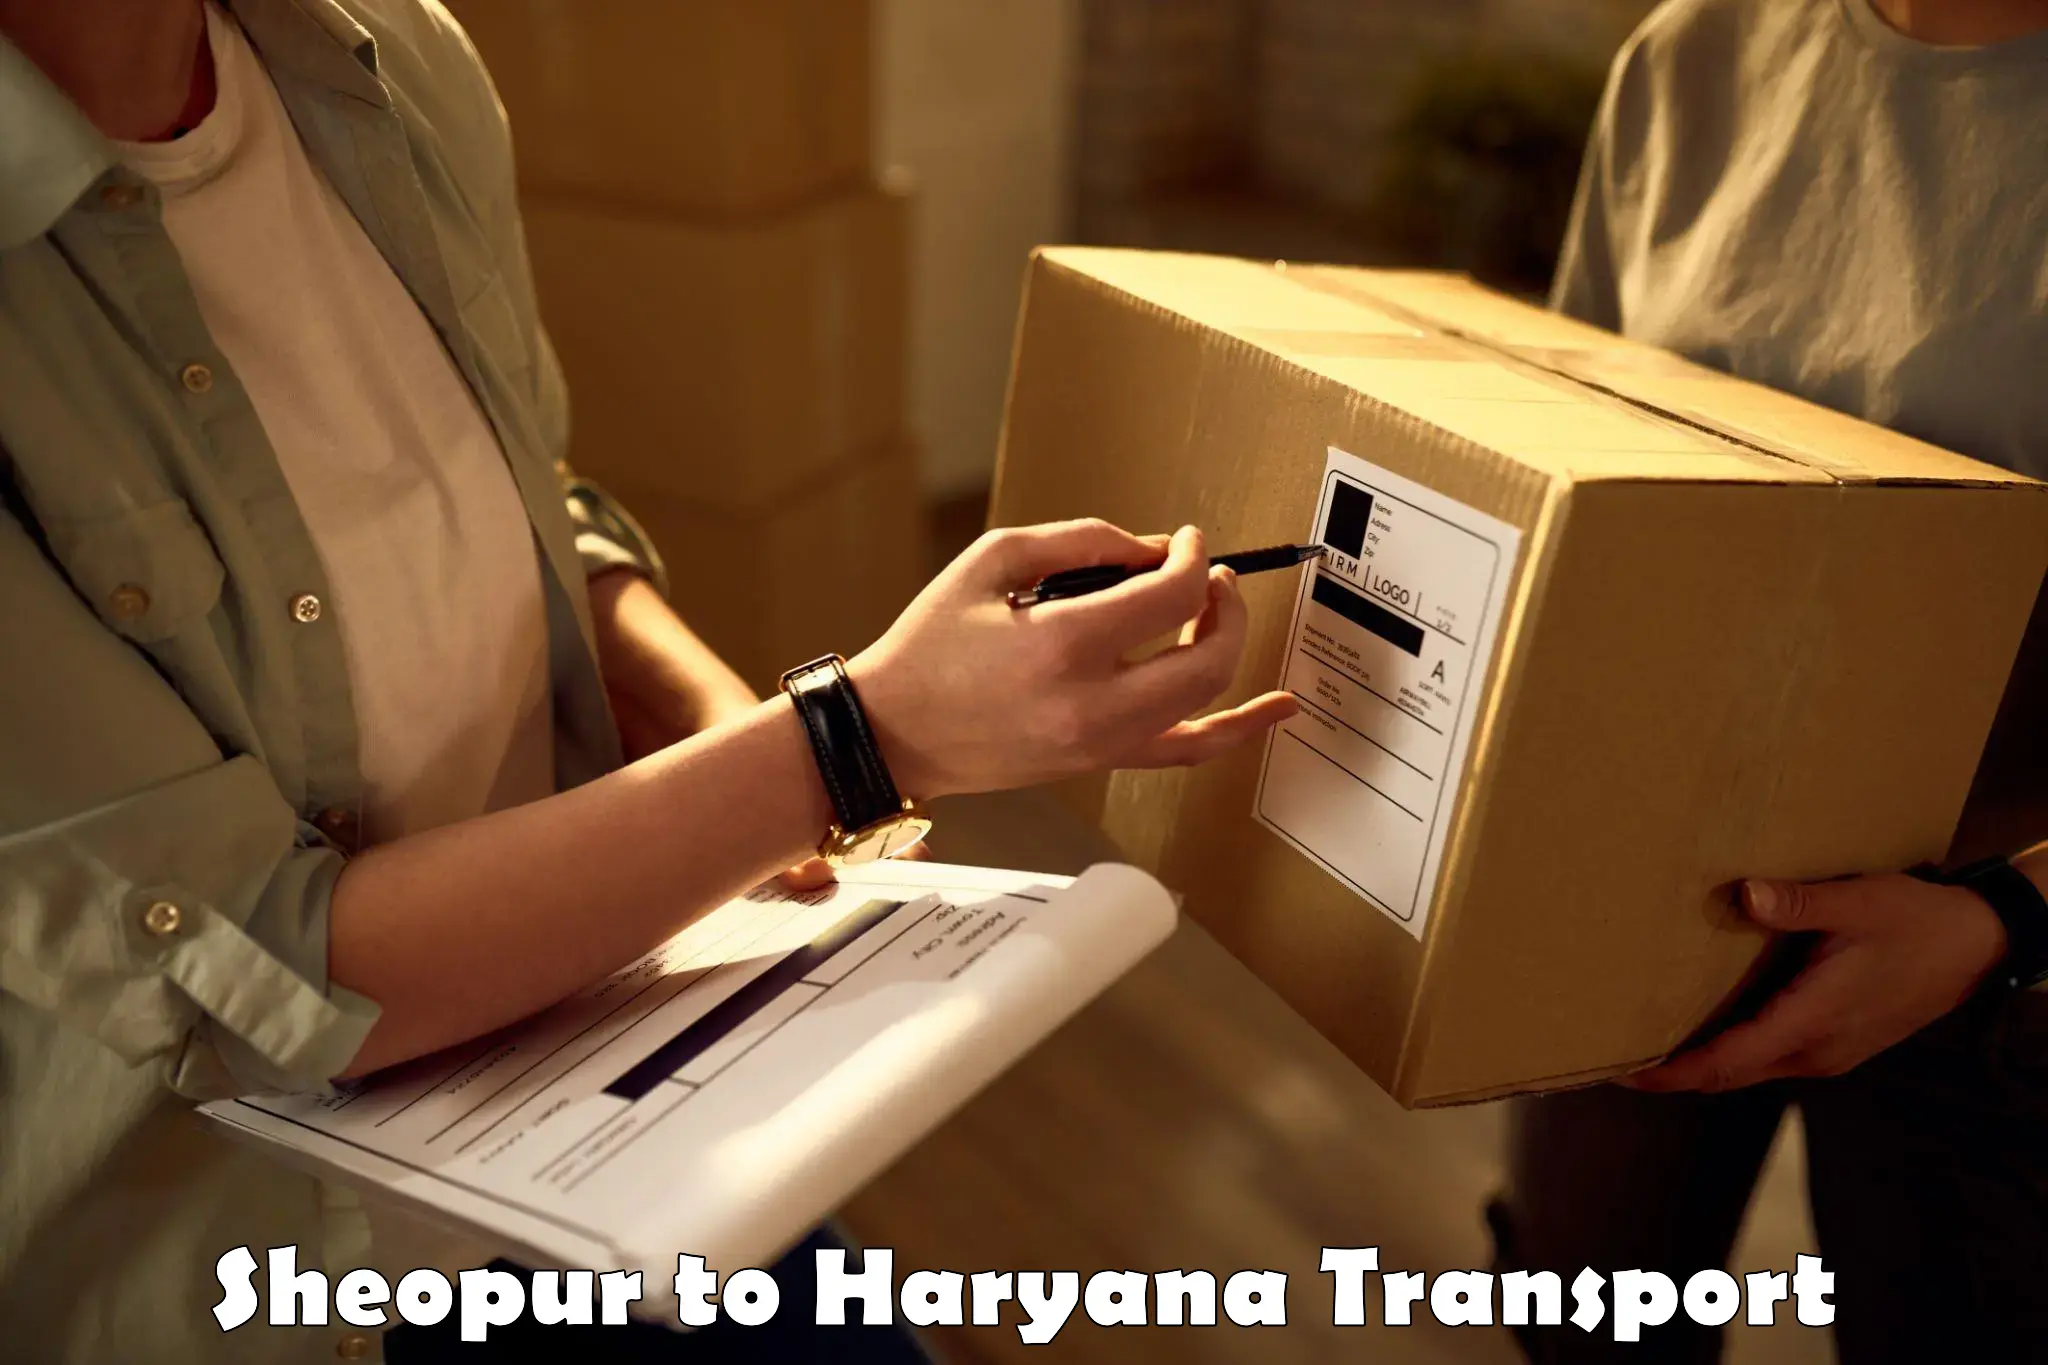 Daily transport service Sheopur to Bilaspur Haryana